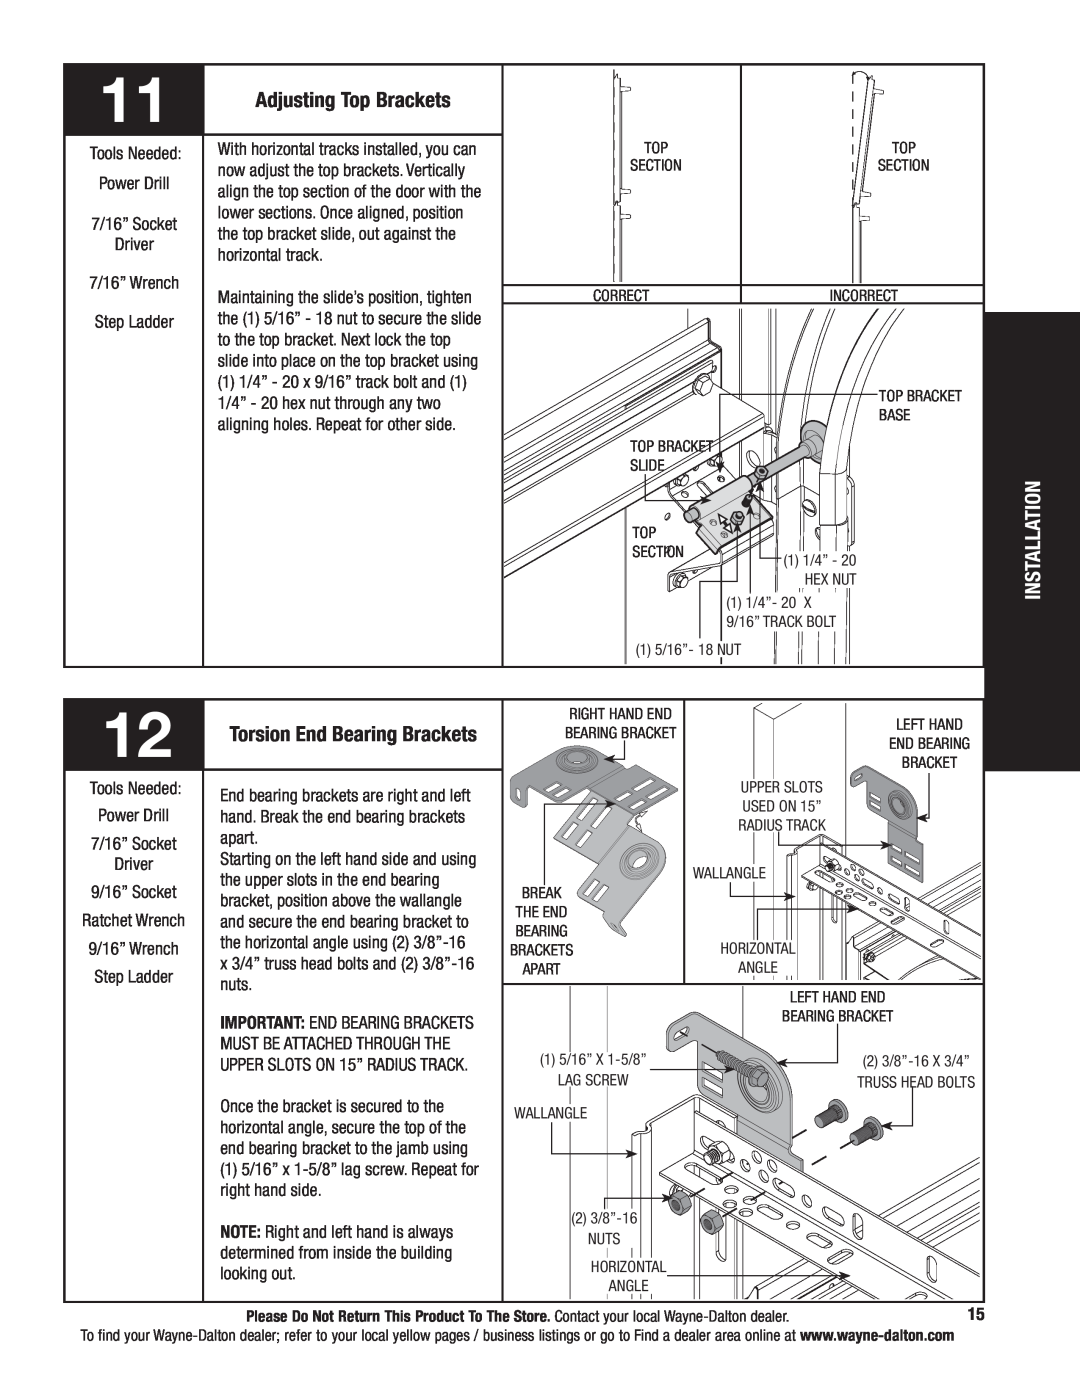 Wayne-Dalton 9800 installation instructions Adjusting Top Brackets, Torsion End Bearing Brackets, Installation 